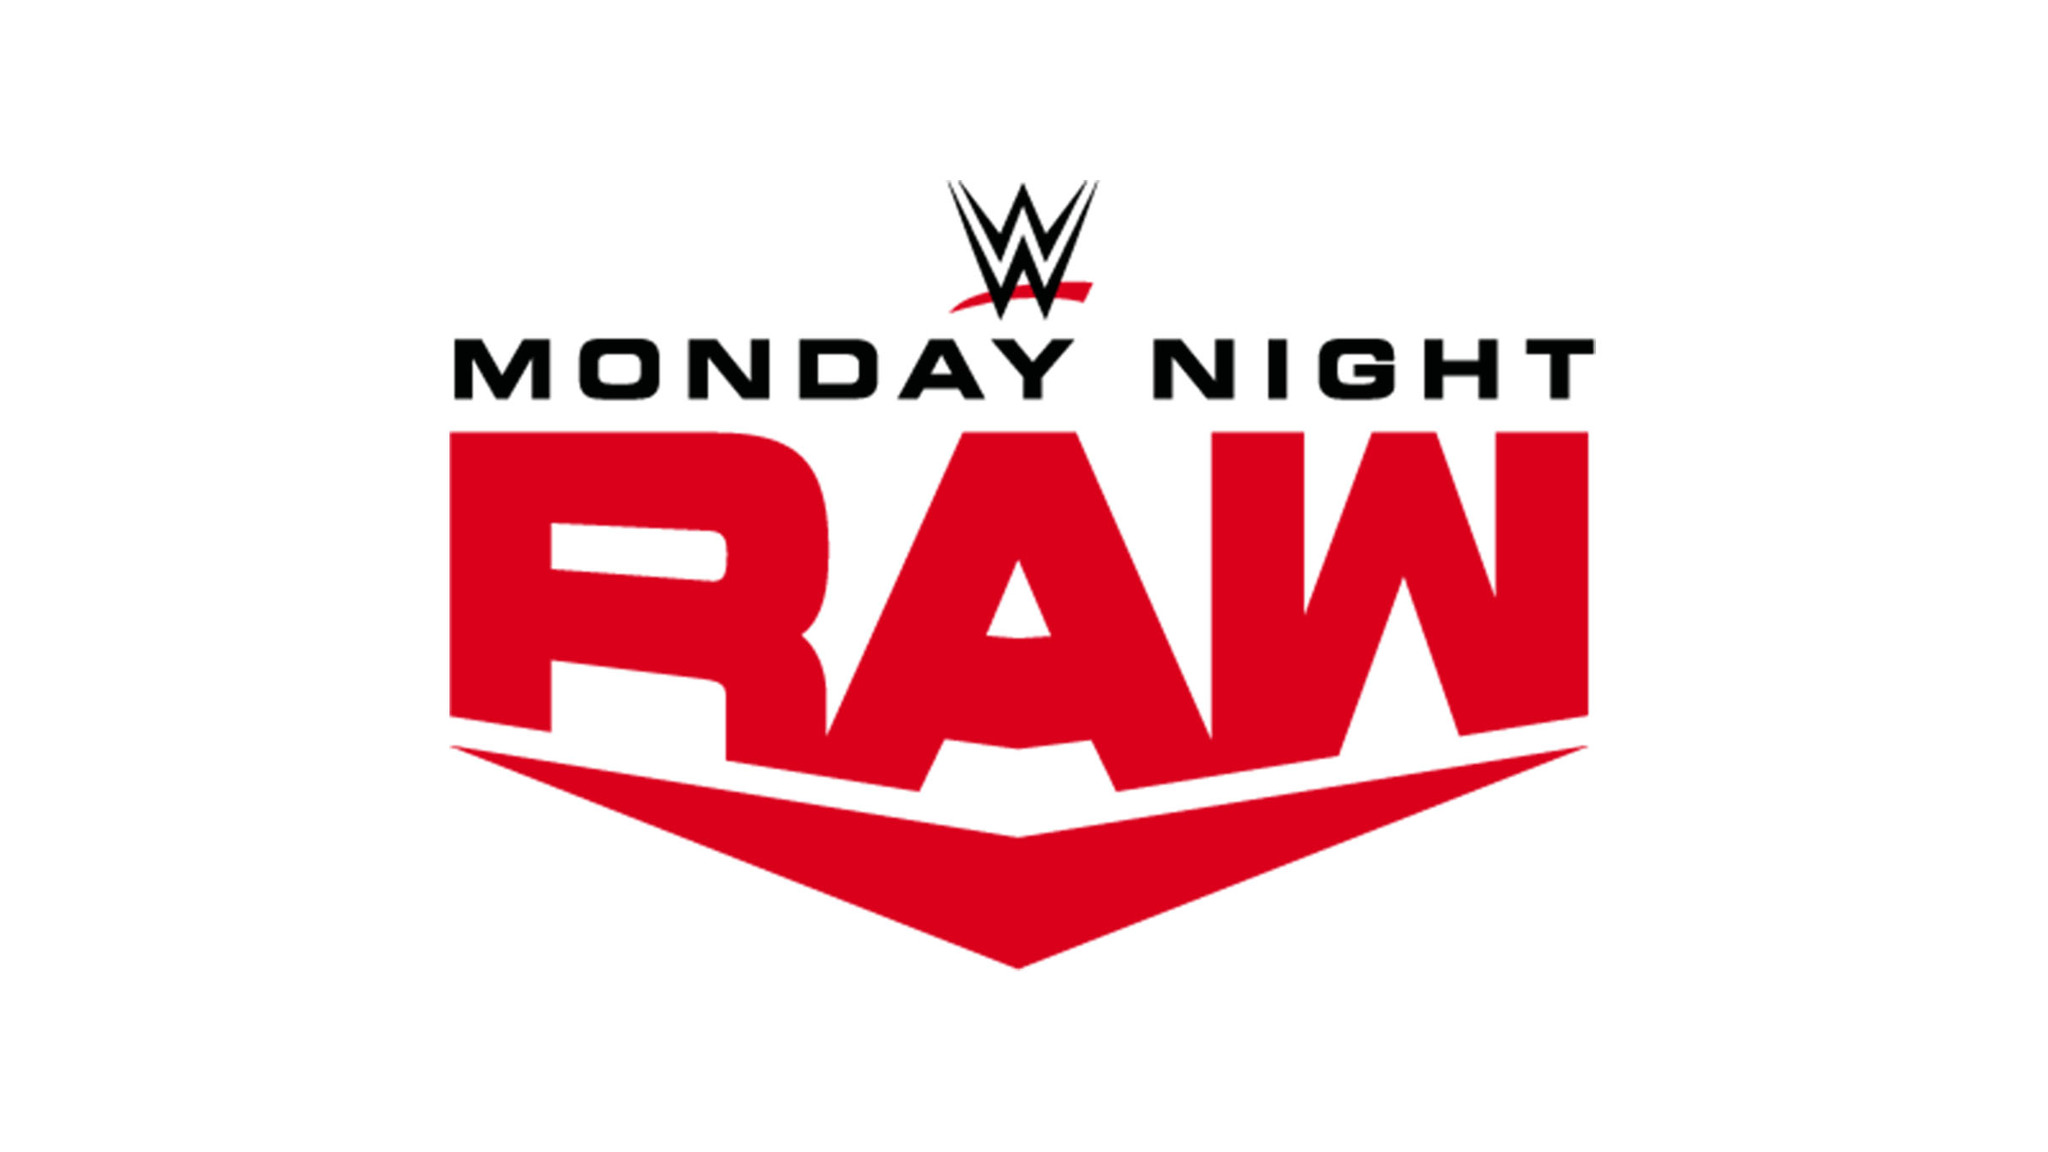 WWE Monday Night RAW Tickets Single Game Tickets & Schedule